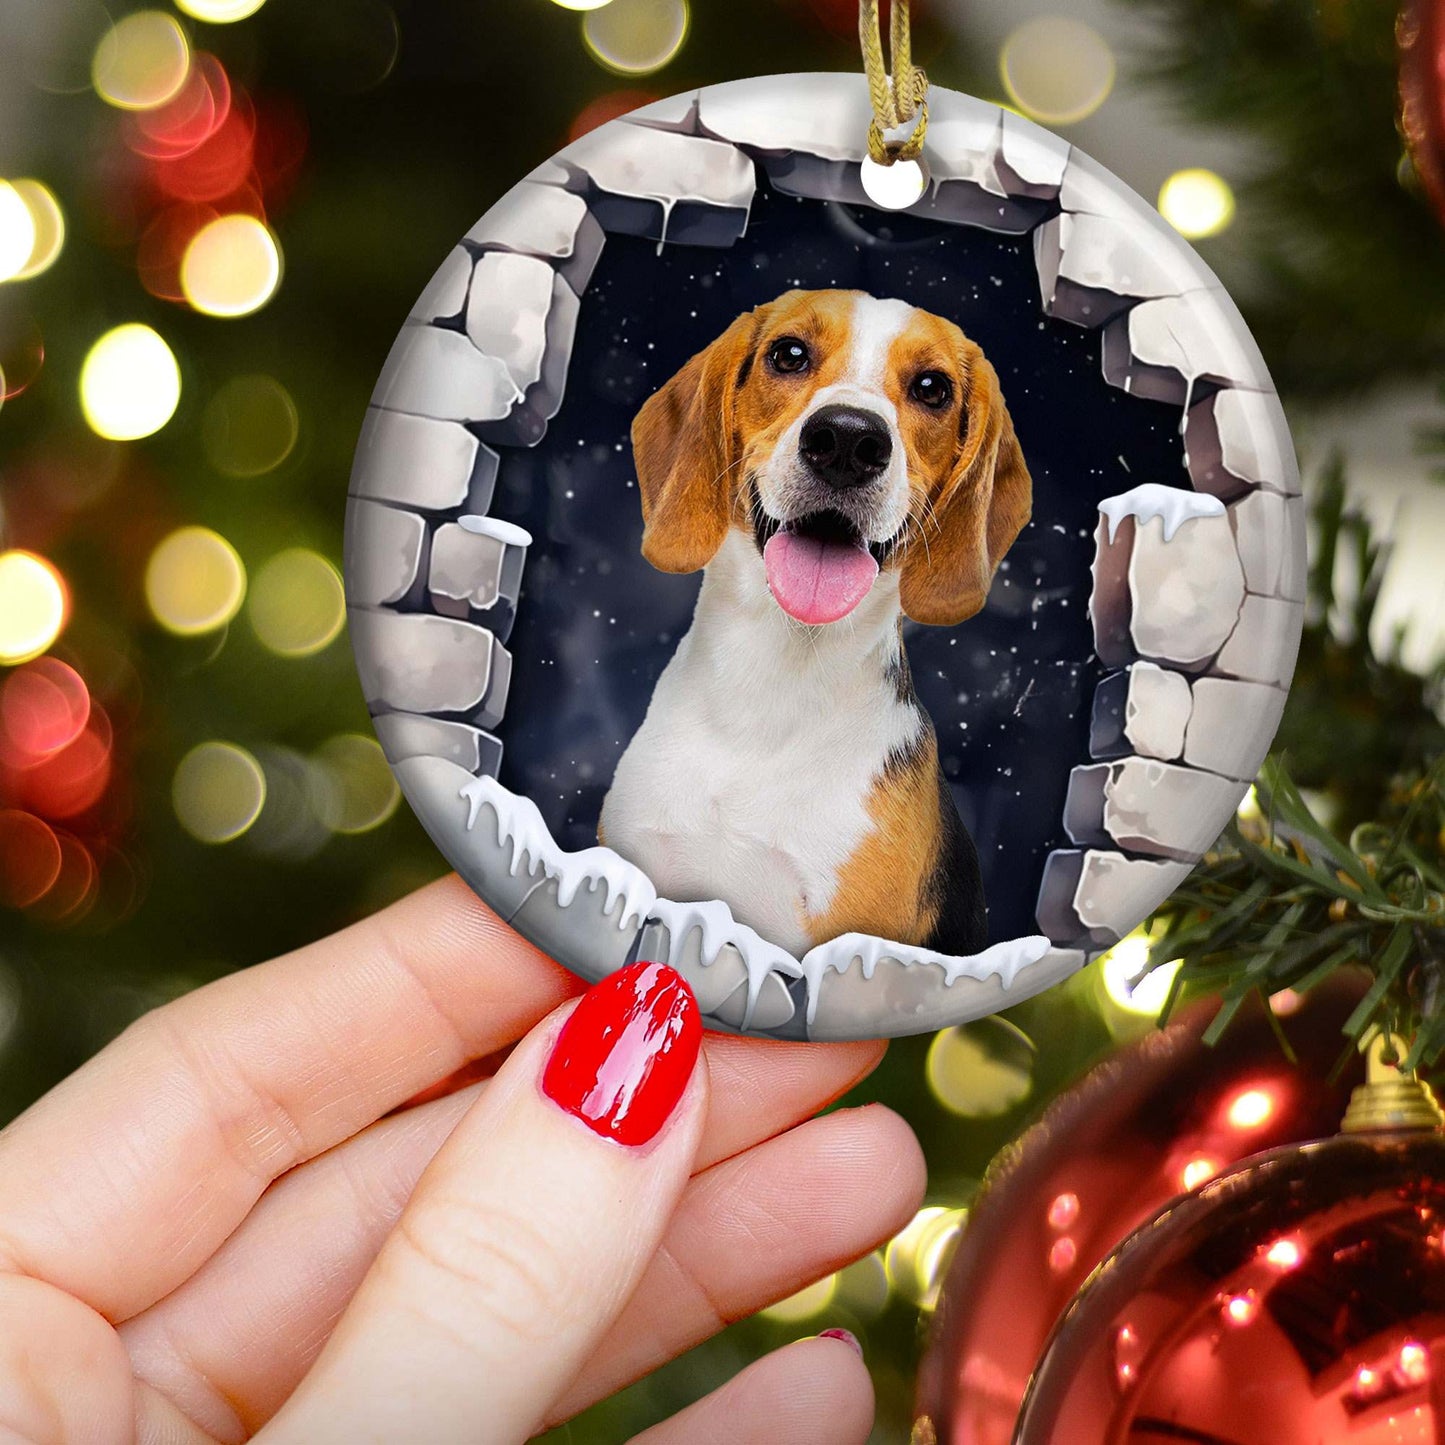 Christmas Pet - Personalized Ceramic Photo Ornament